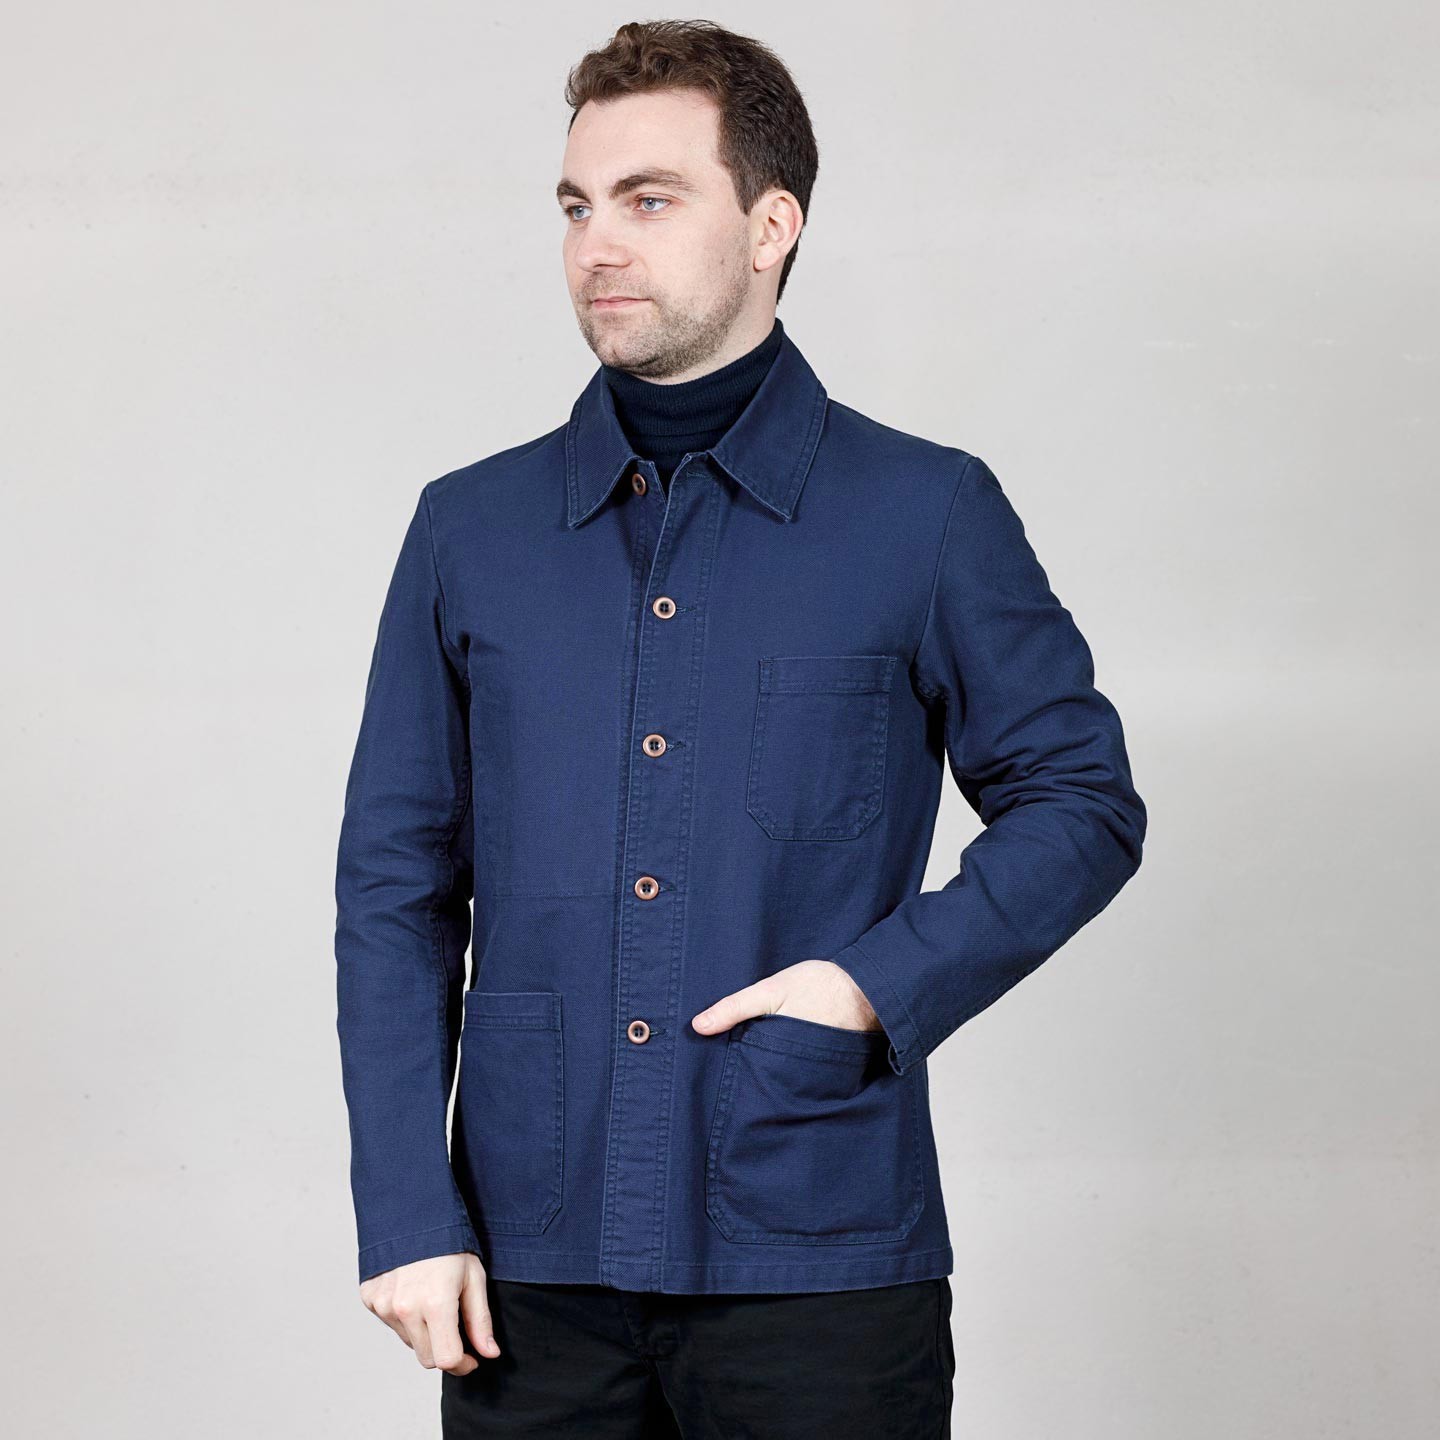 VETRA Workwear Jacket in organic cotton twill fabric 1C/5C navy